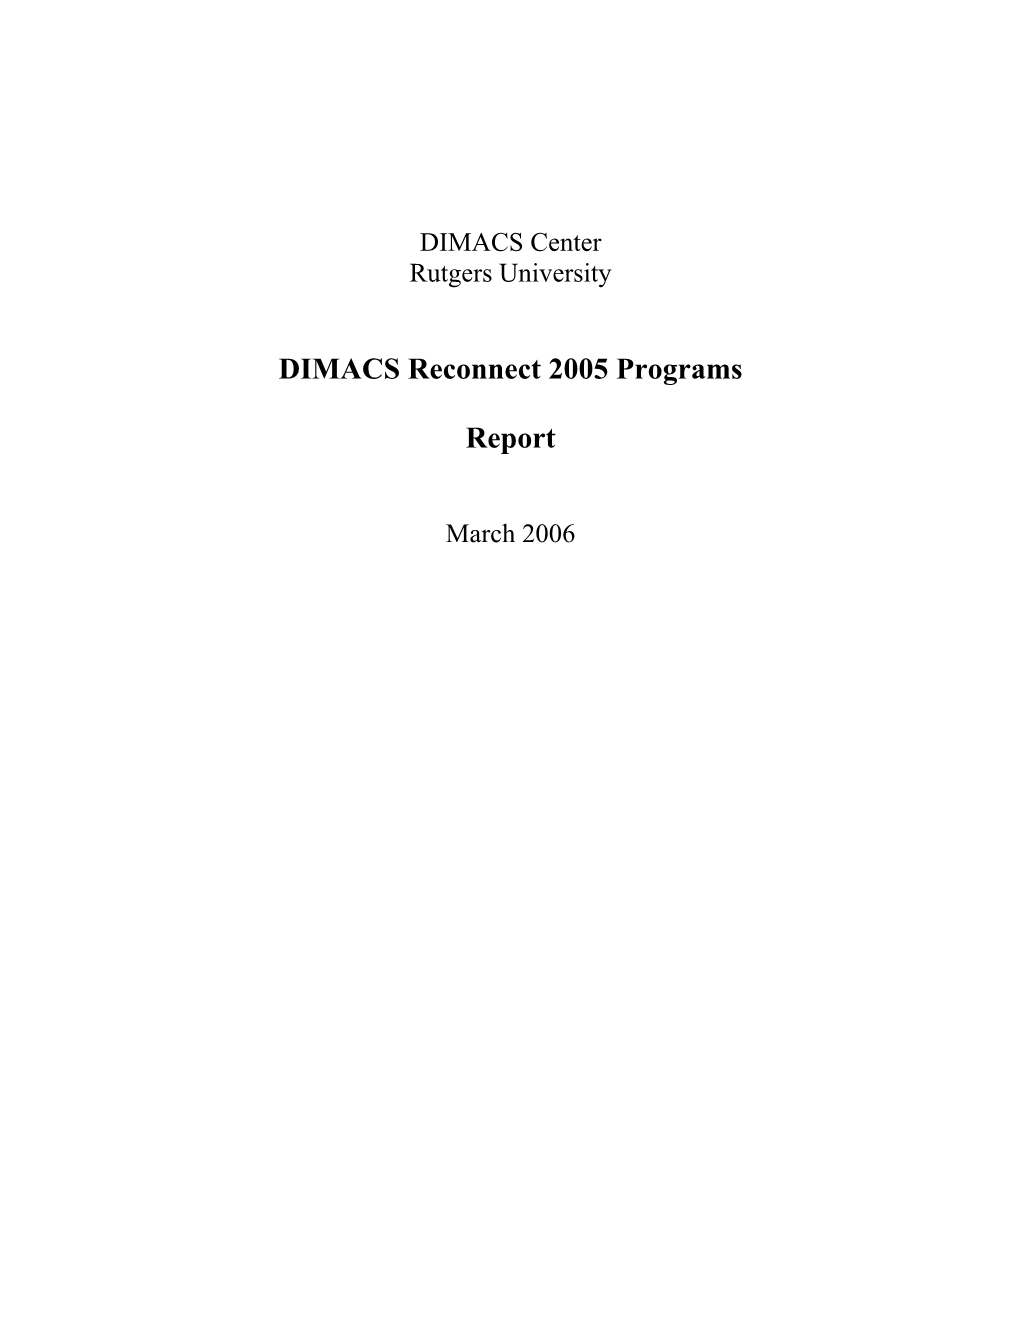 DIMACS Reconnect 2005 Programs Report